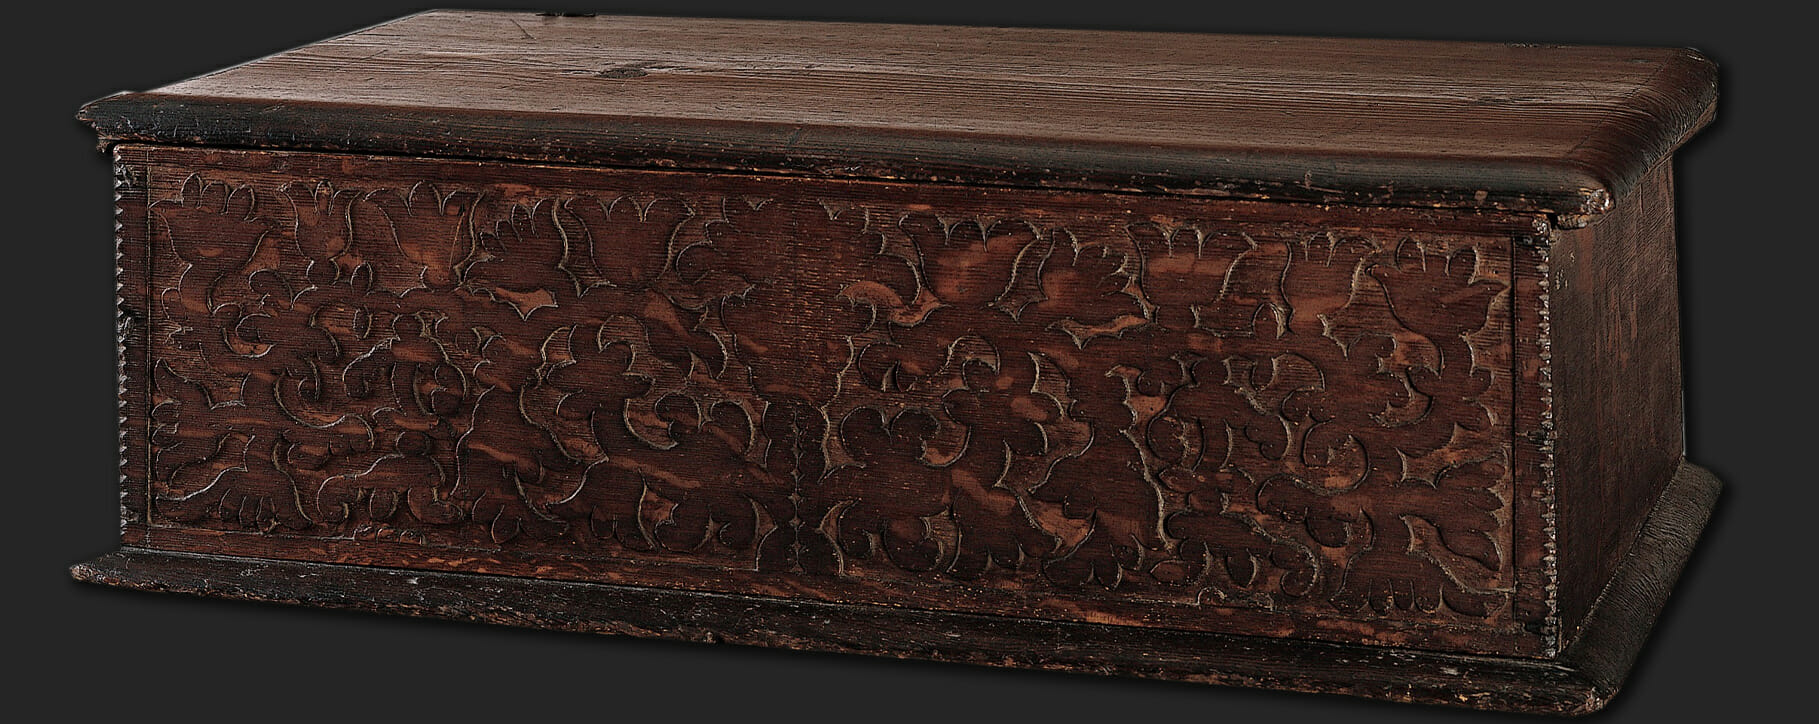 17th century box